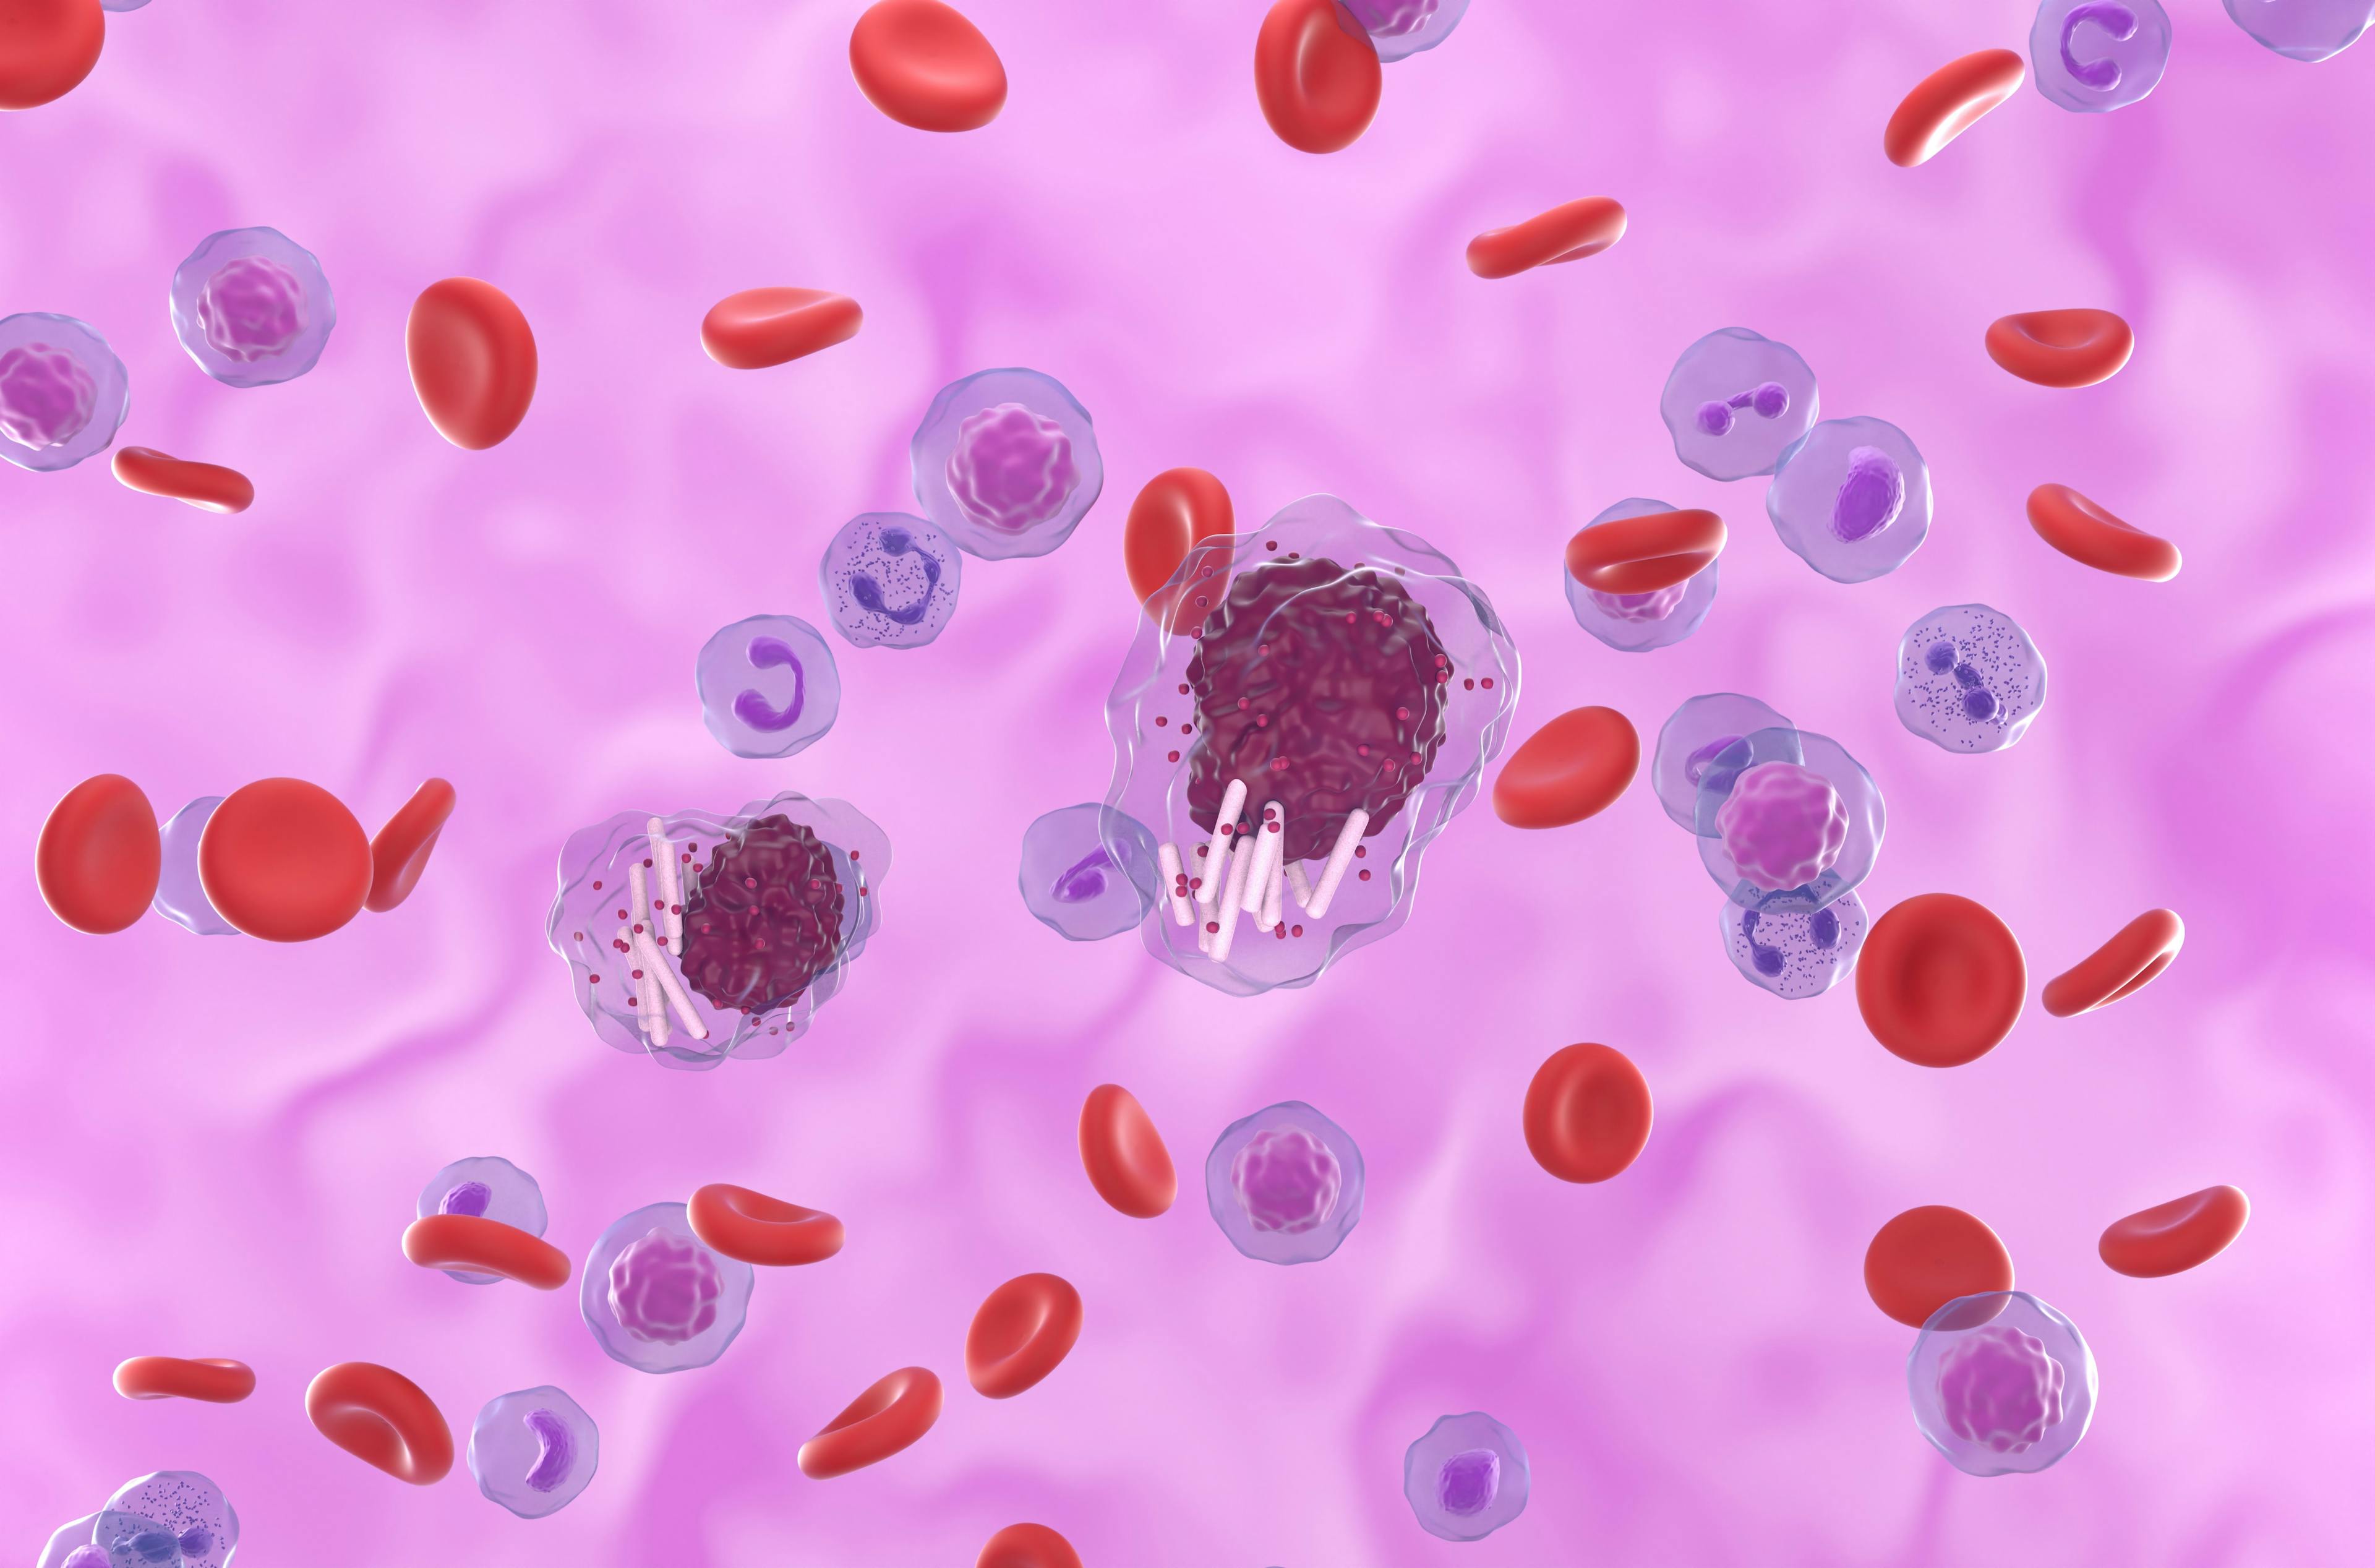 Chronic lymphocytic leukemia cells in blood flow-isometric view | Image credit: LASZLO - stock.adobe.com